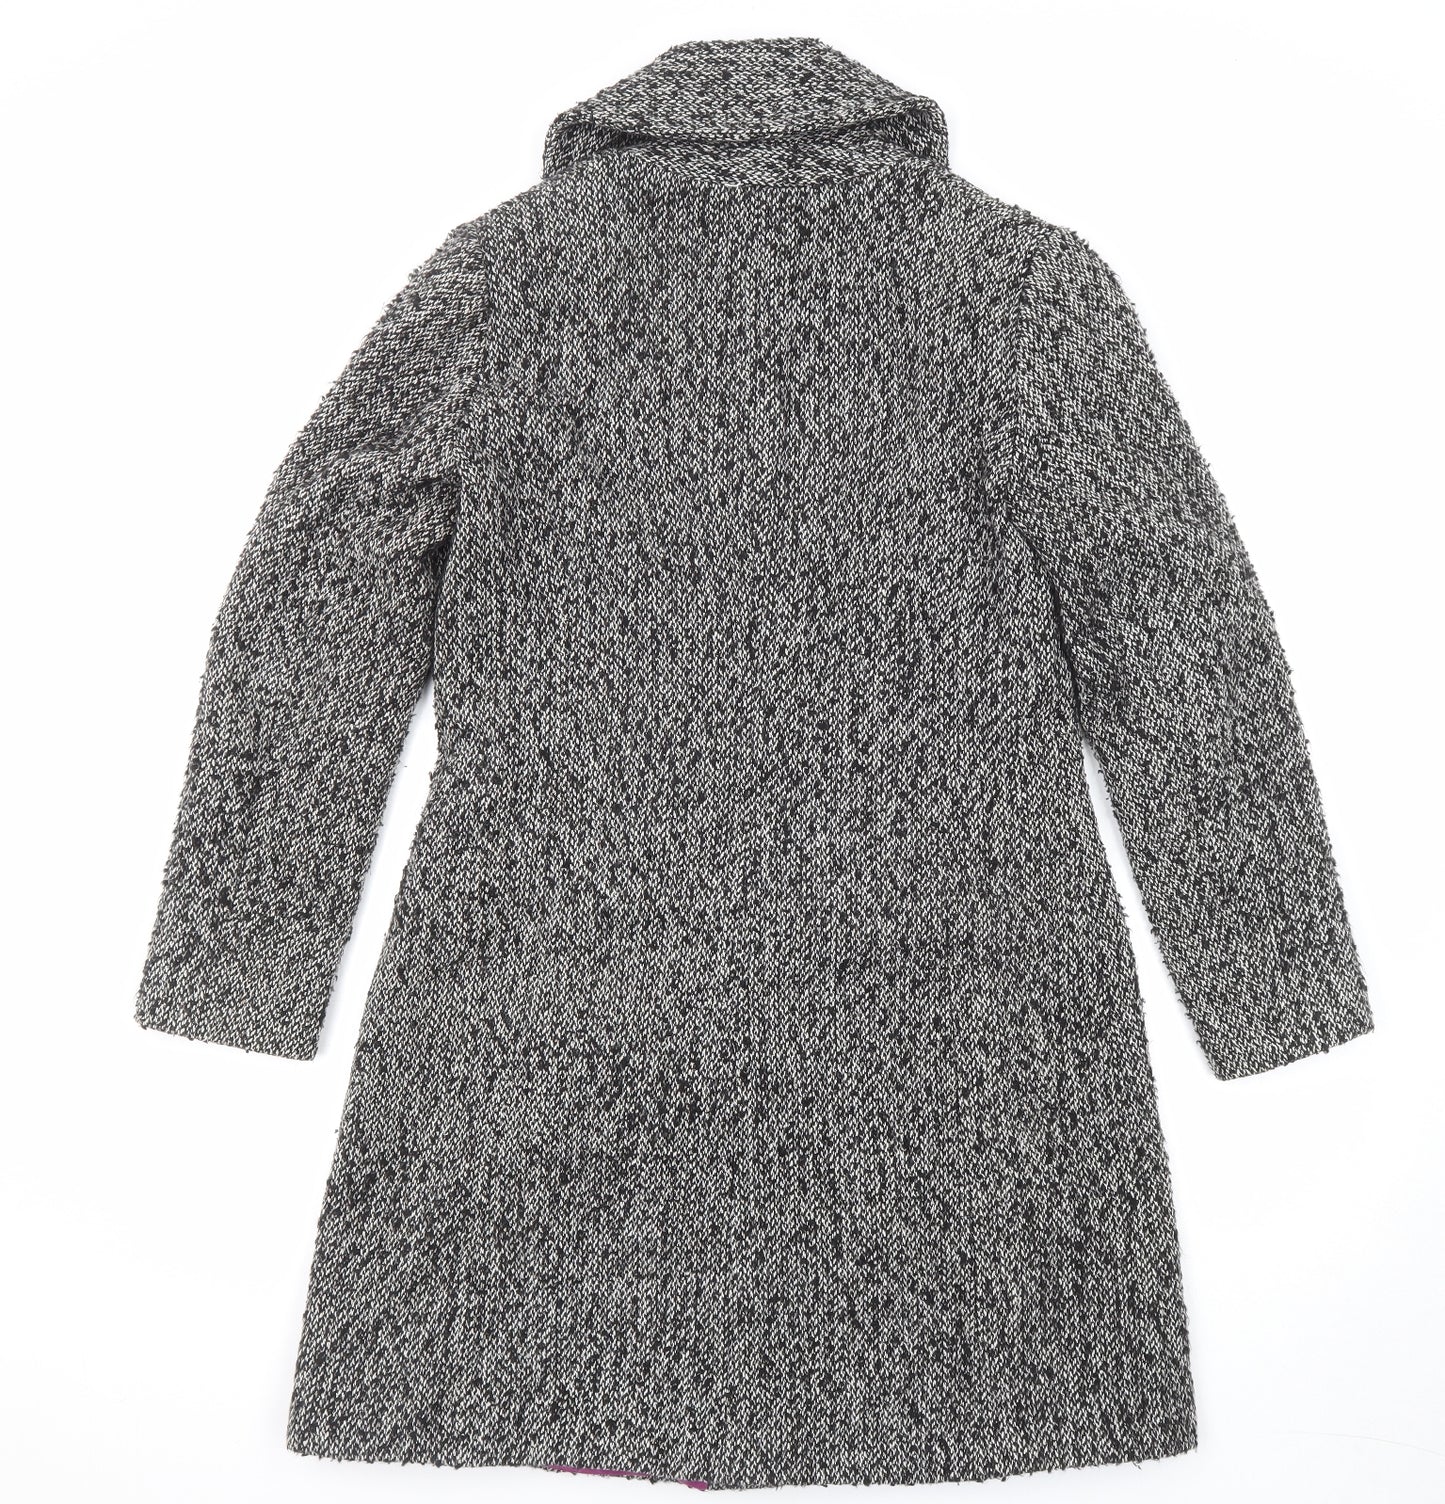 Per Una Womens Black Geometric Overcoat Coat Size 10 Button